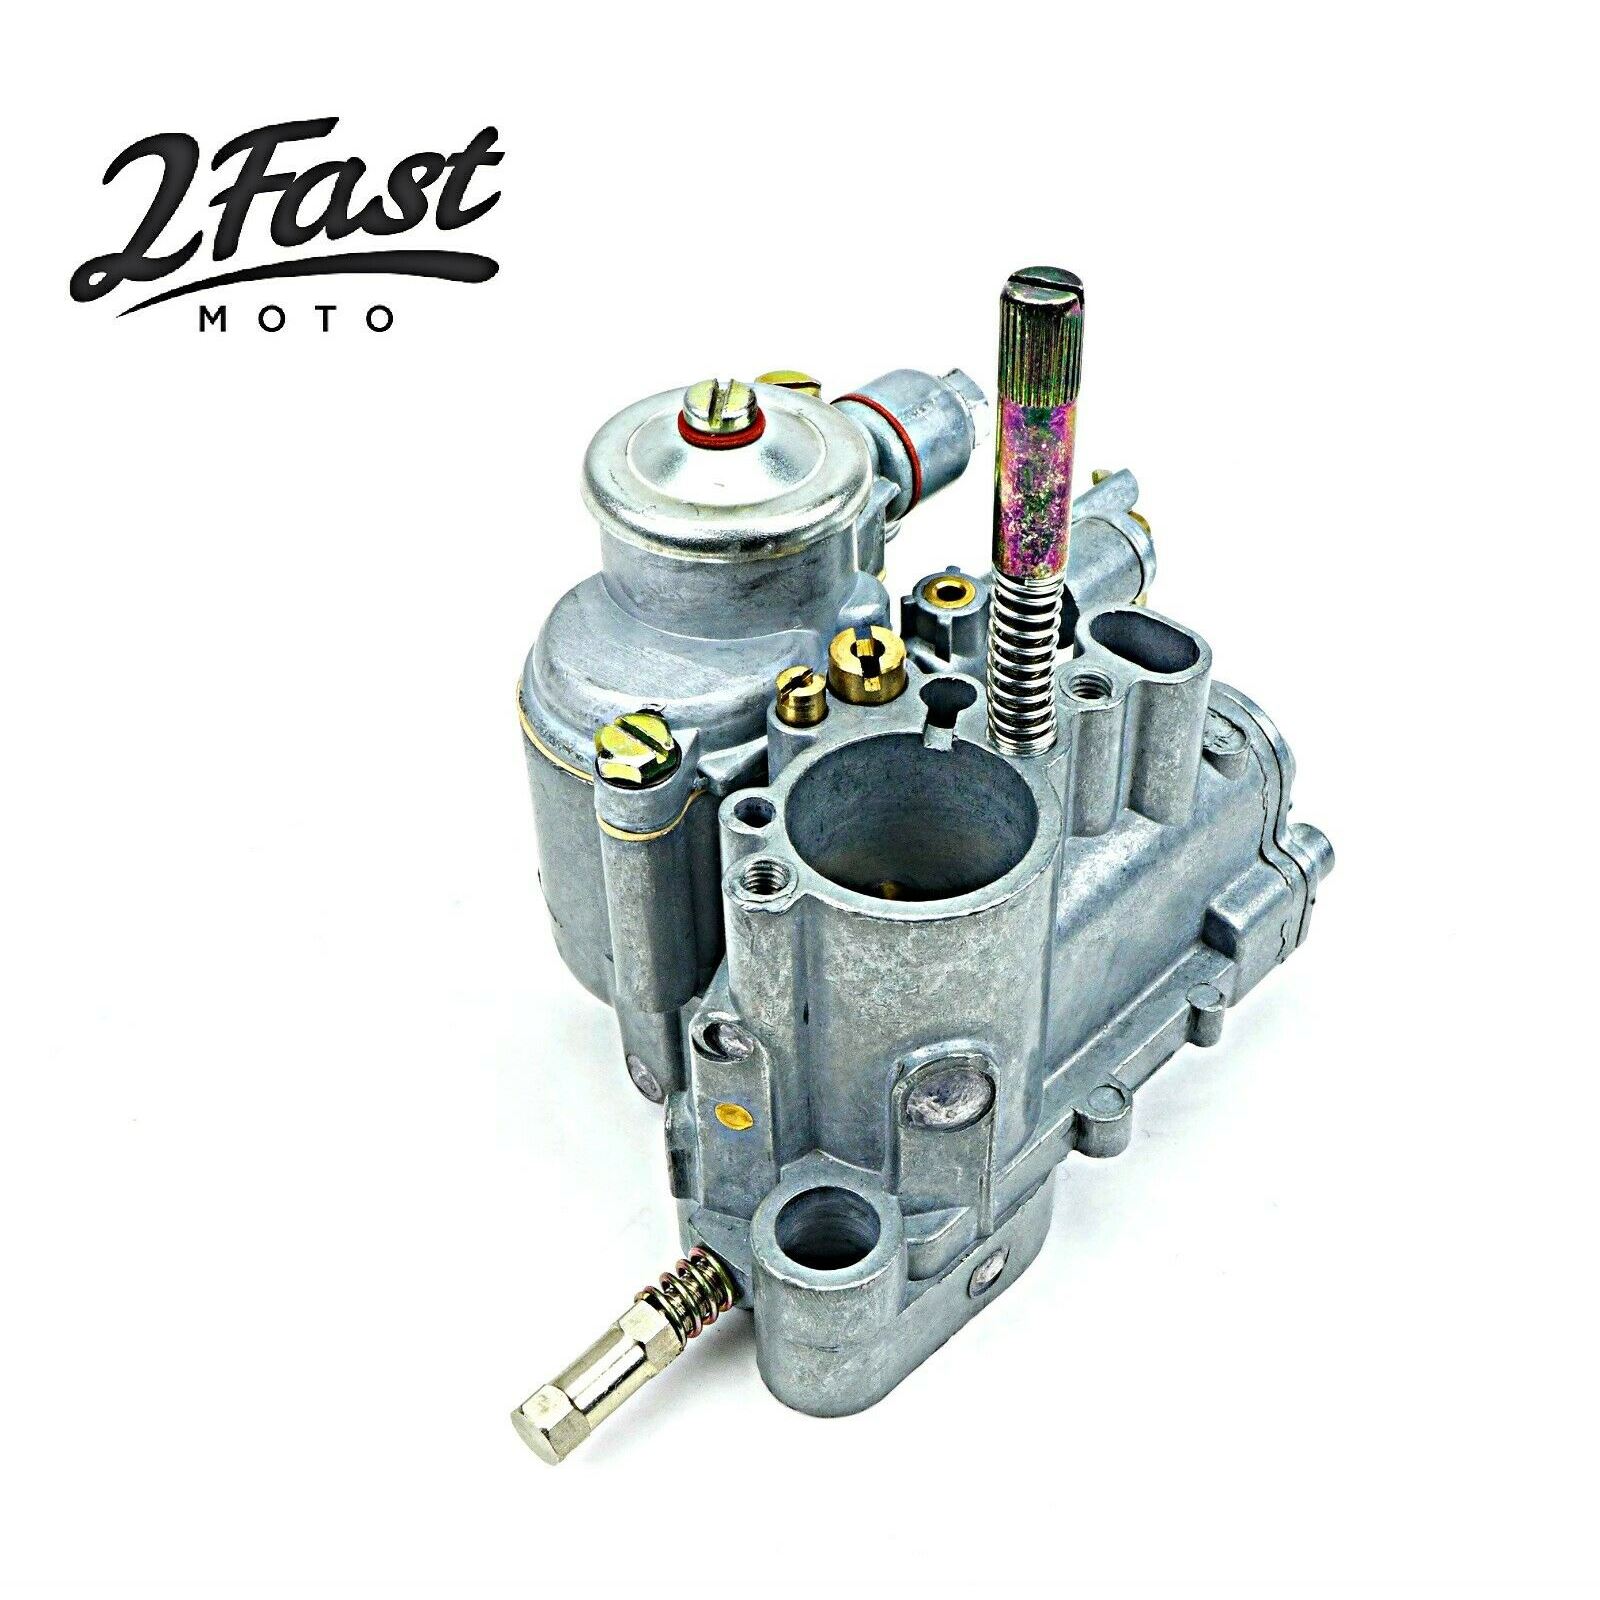 2FastMoto Complete SI 24 24E Carburetor for Vespa PX200 PX200E Rally 200